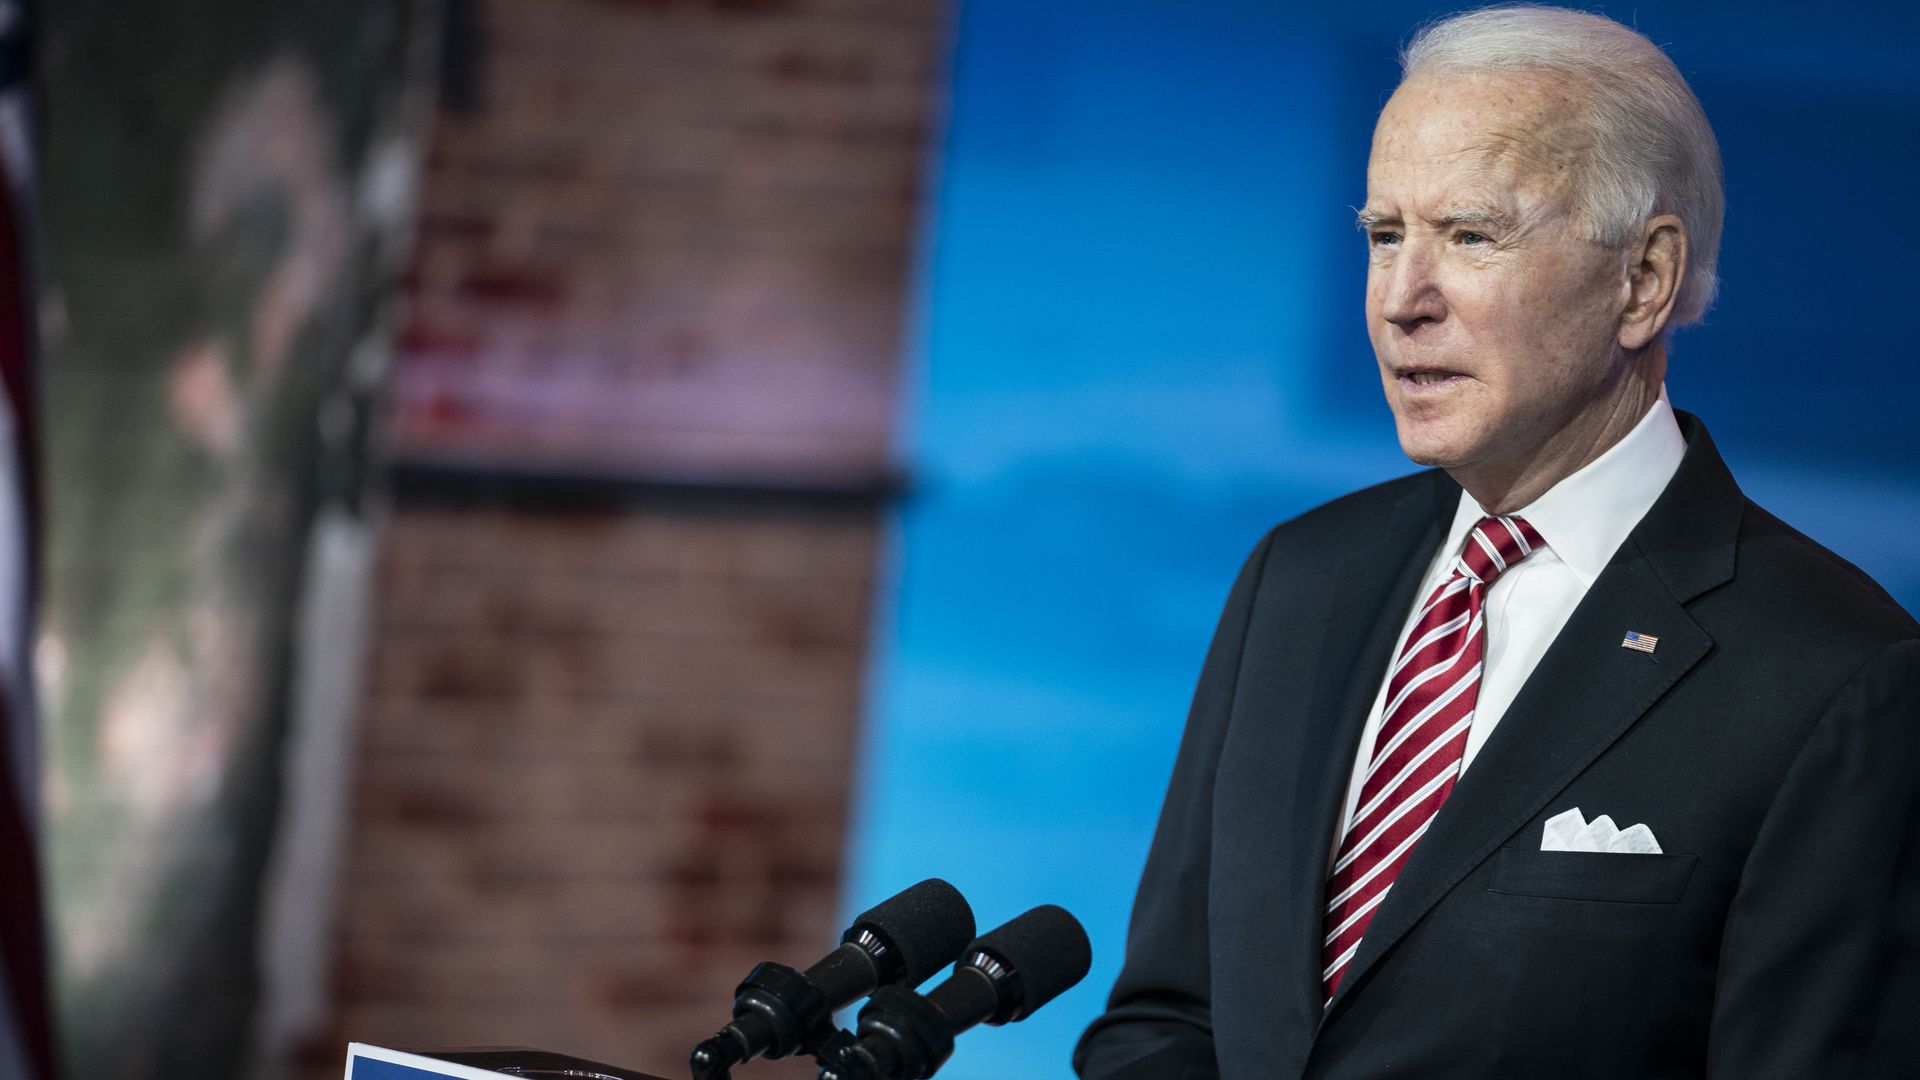 Photo of Joe Biden in a suit standing behind a podium with microphones